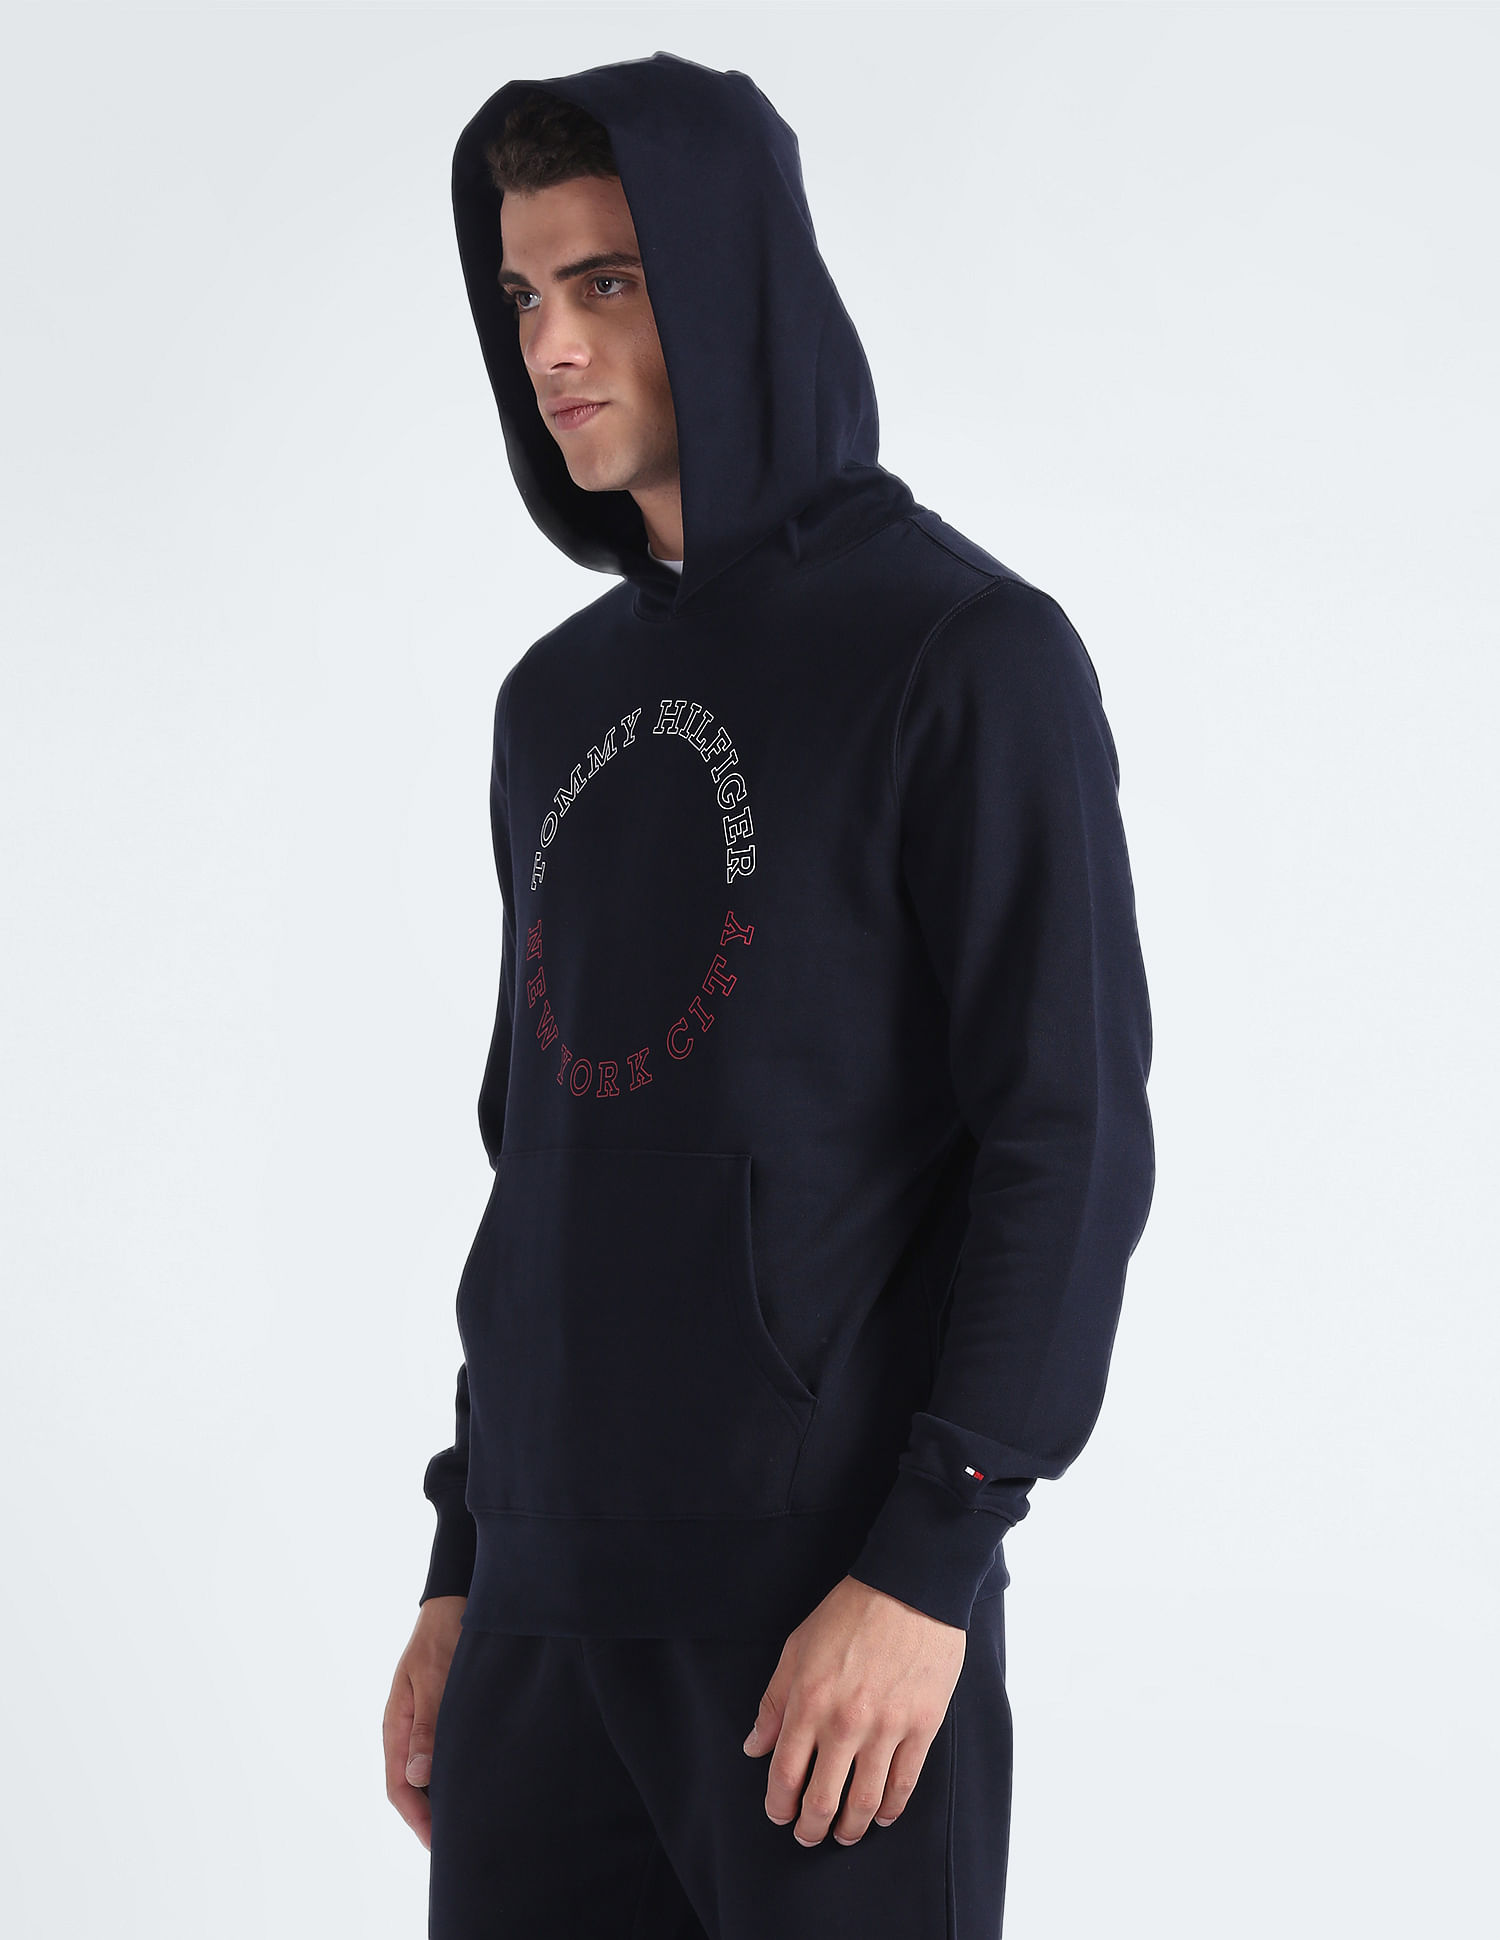 Roundall Tommy Monotype Sweatshirt Buy Hooded Hilfiger